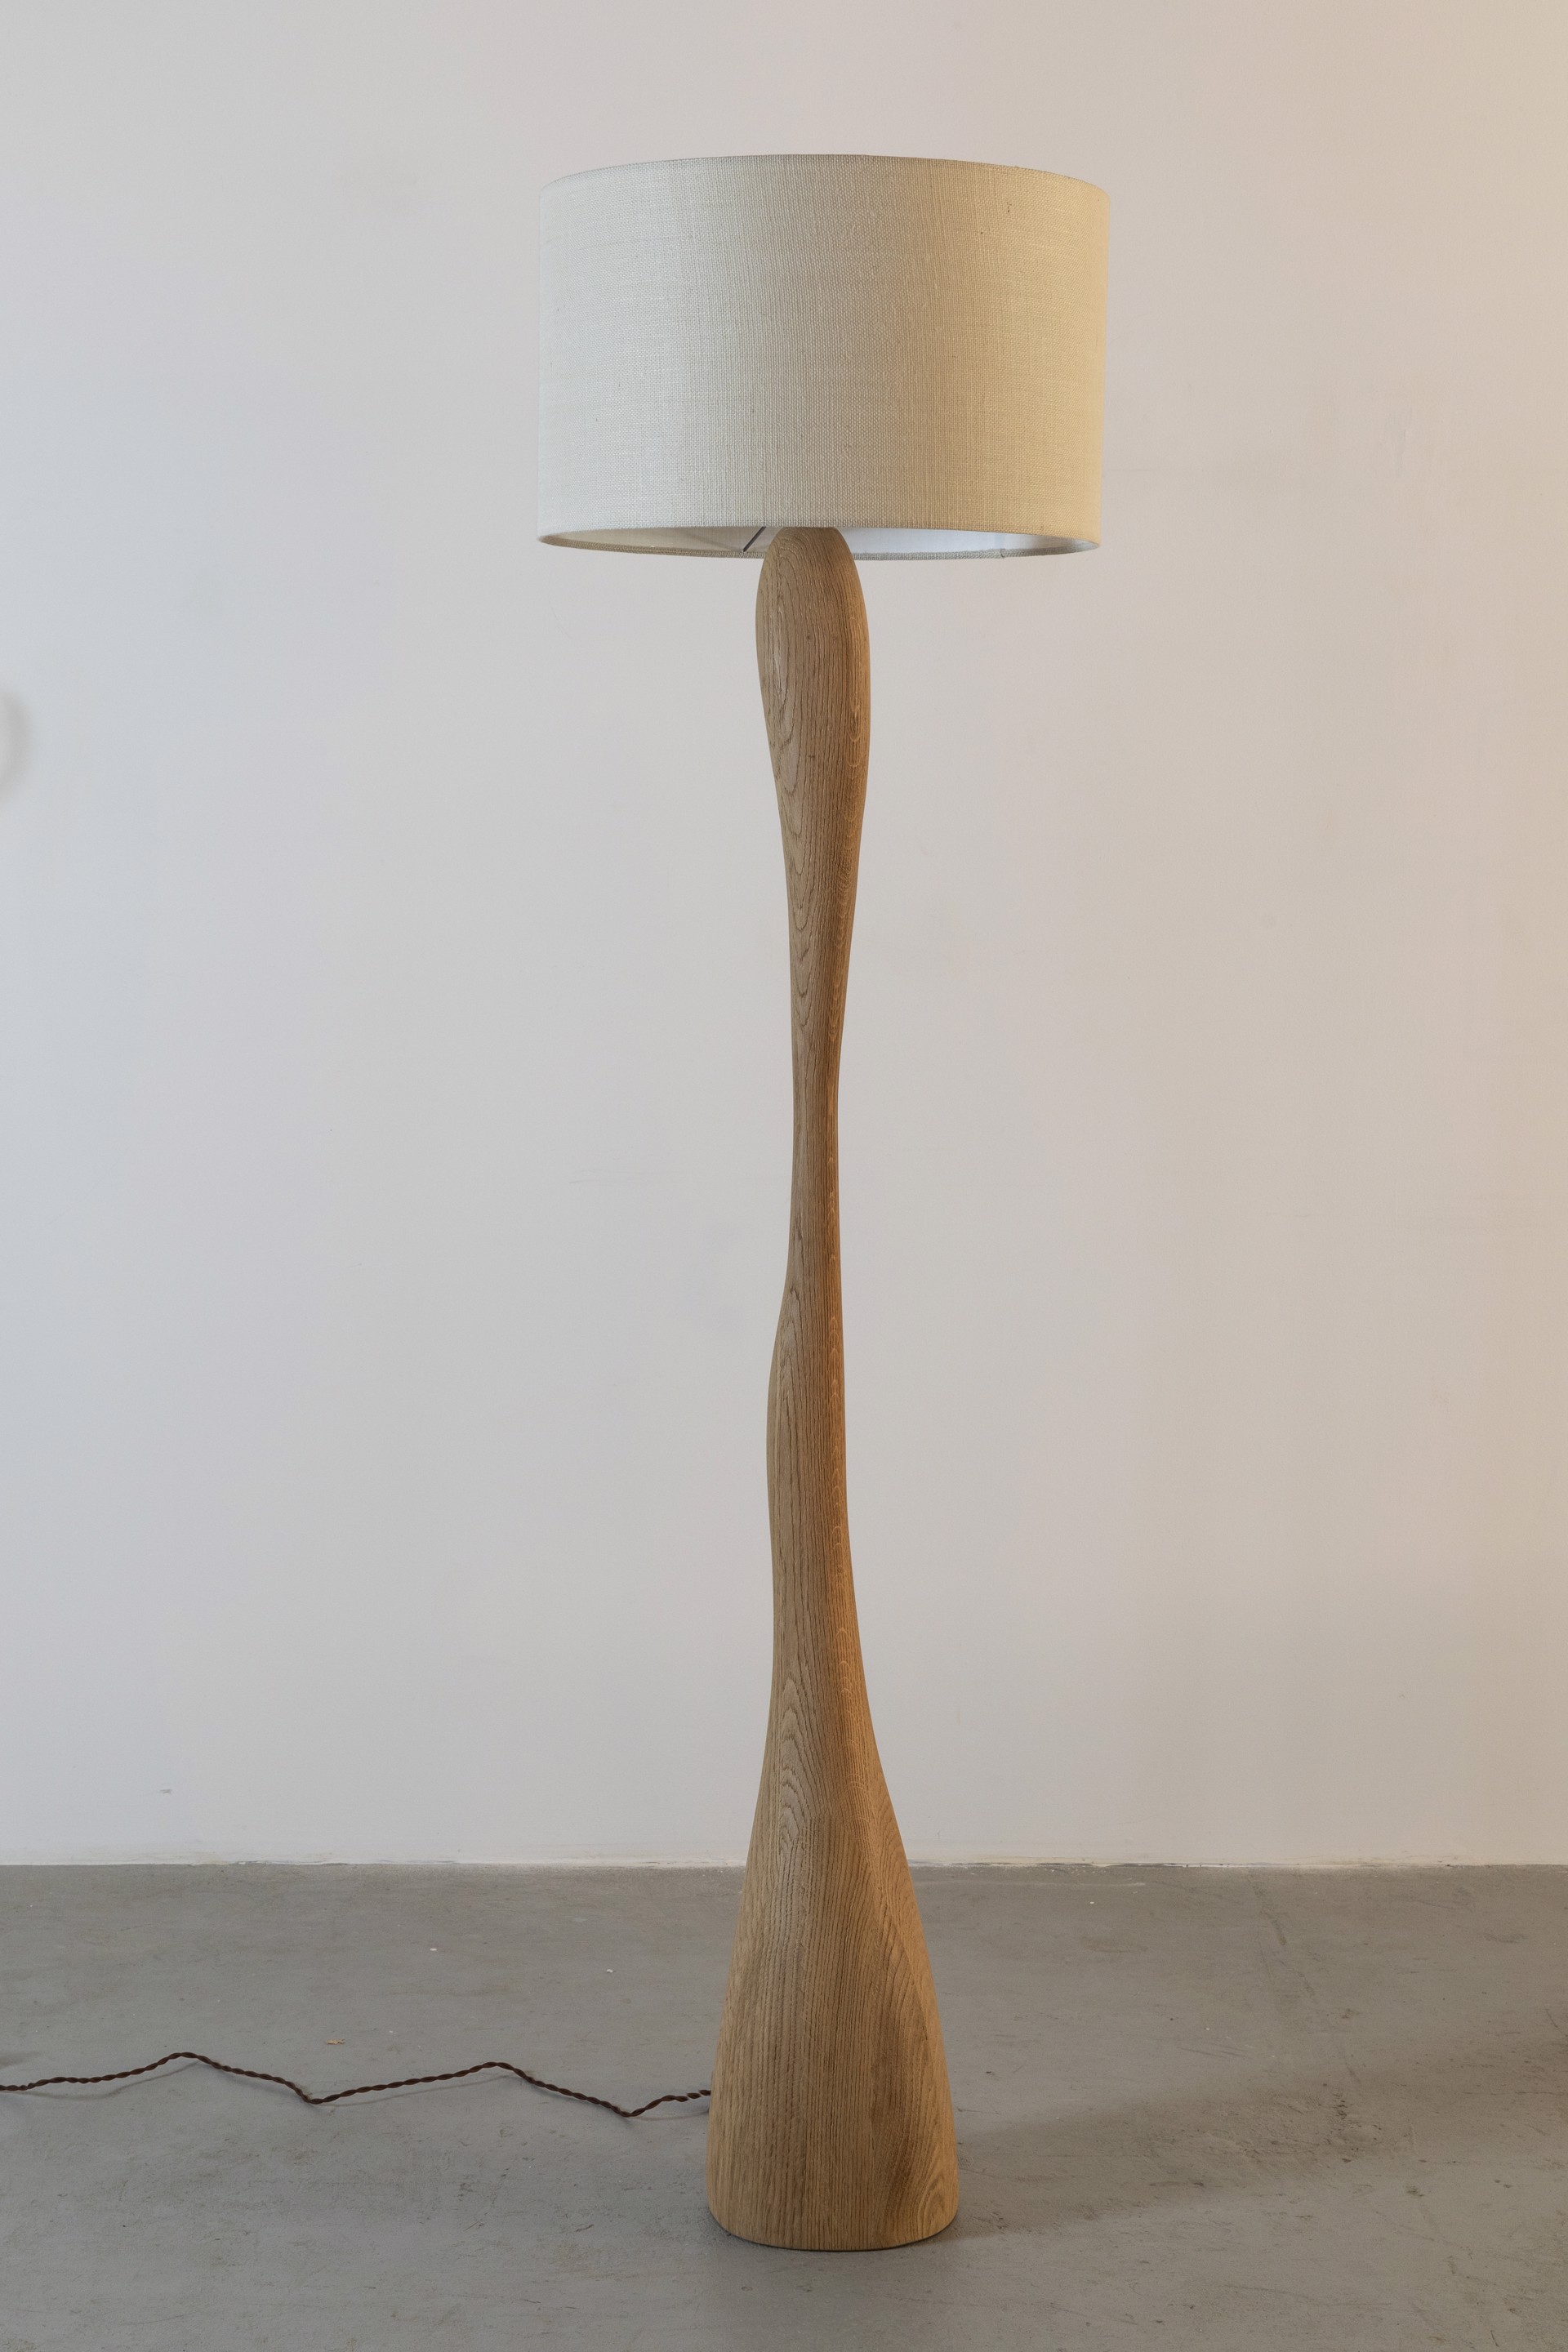 Floor lamp "Leda" by Jacques Jarrige